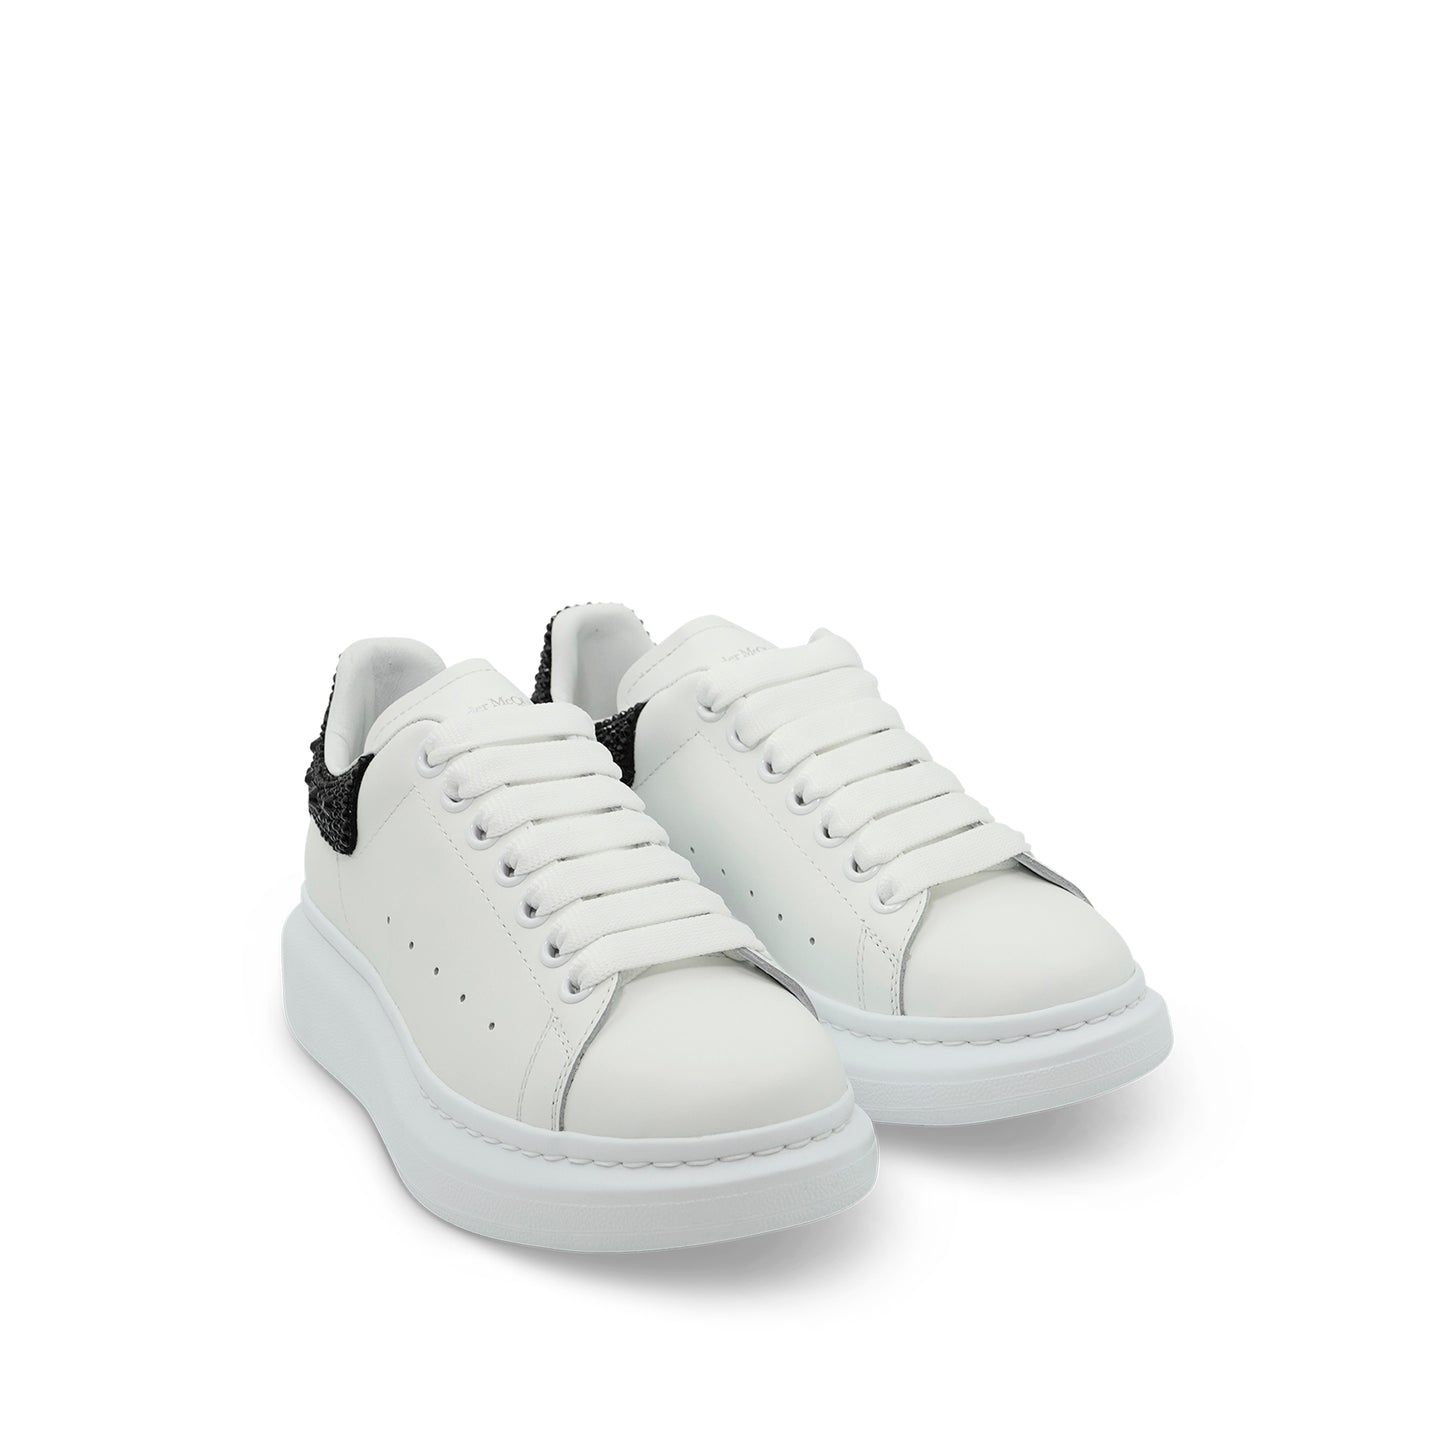 Larry Oversized Heel Sneaker in White/Black Crystal